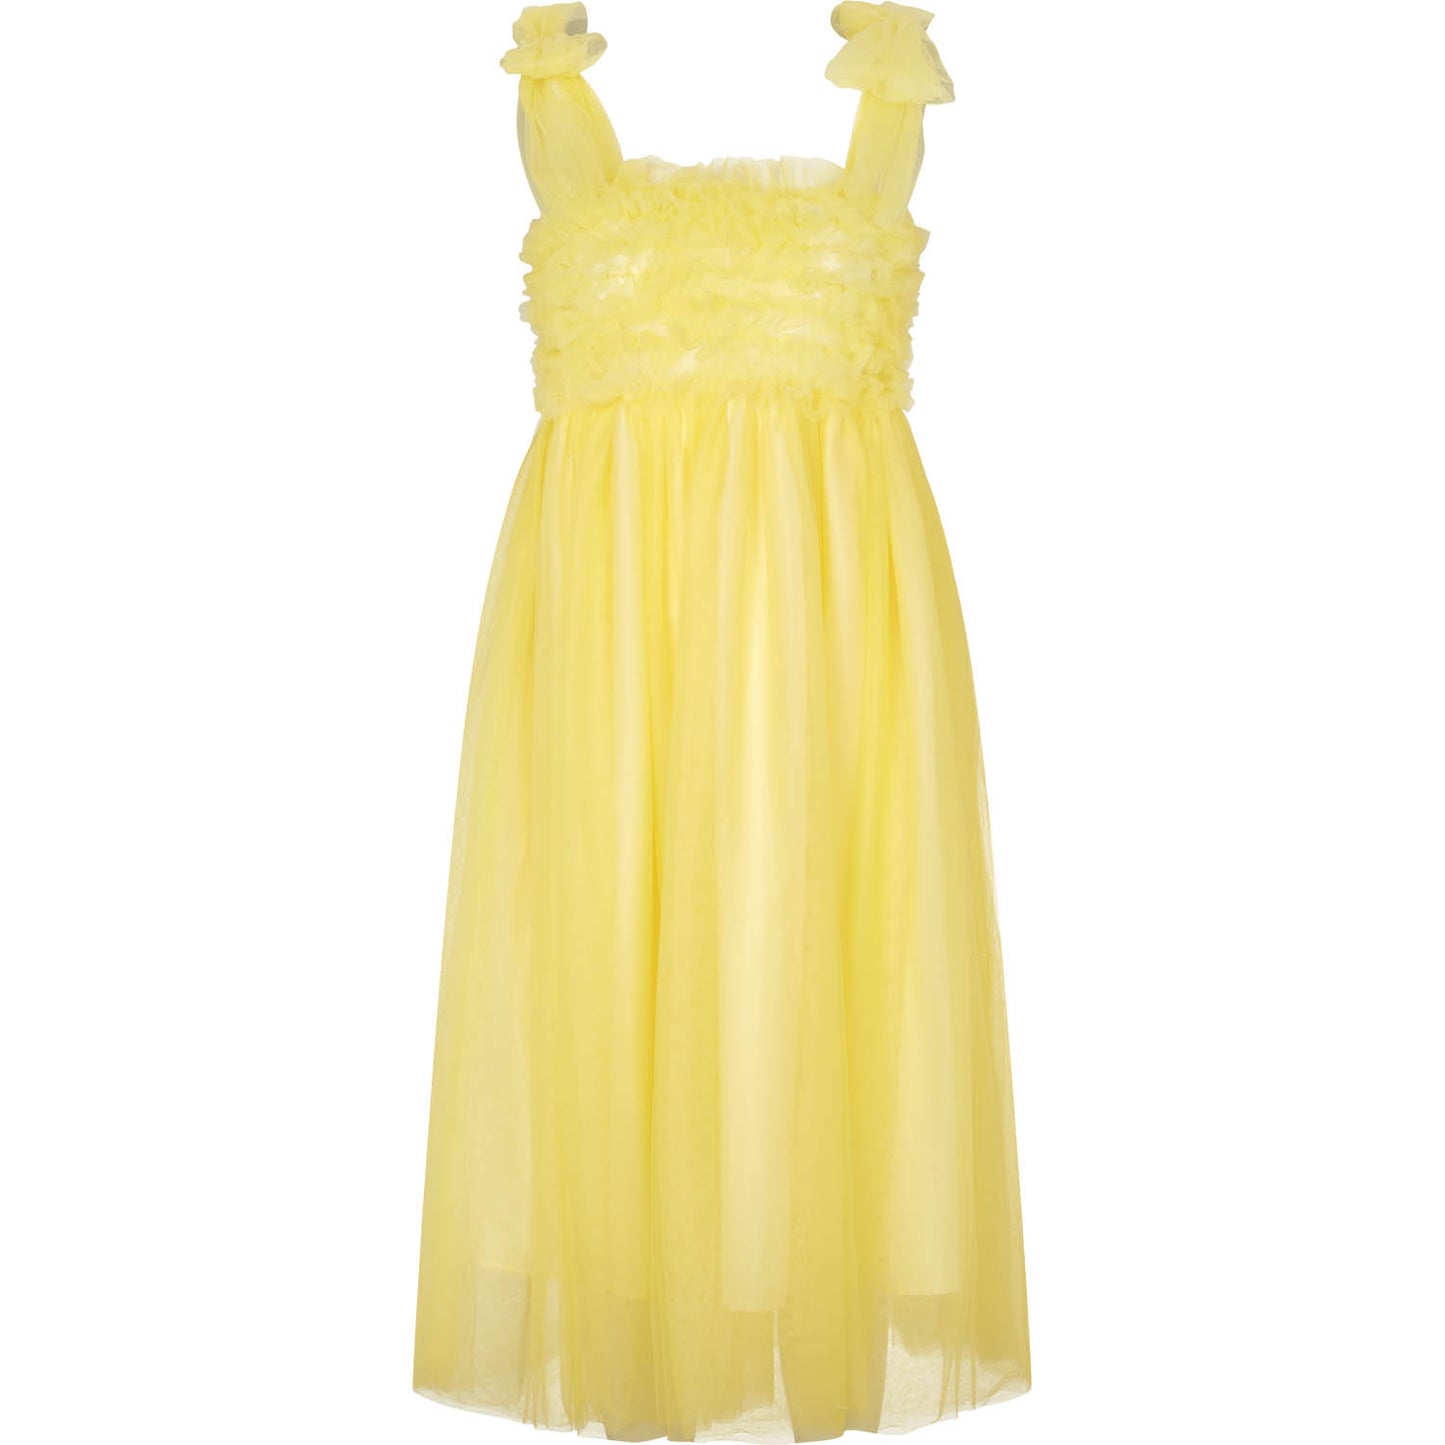 Fey Tulle Dress - Creamy Yellow